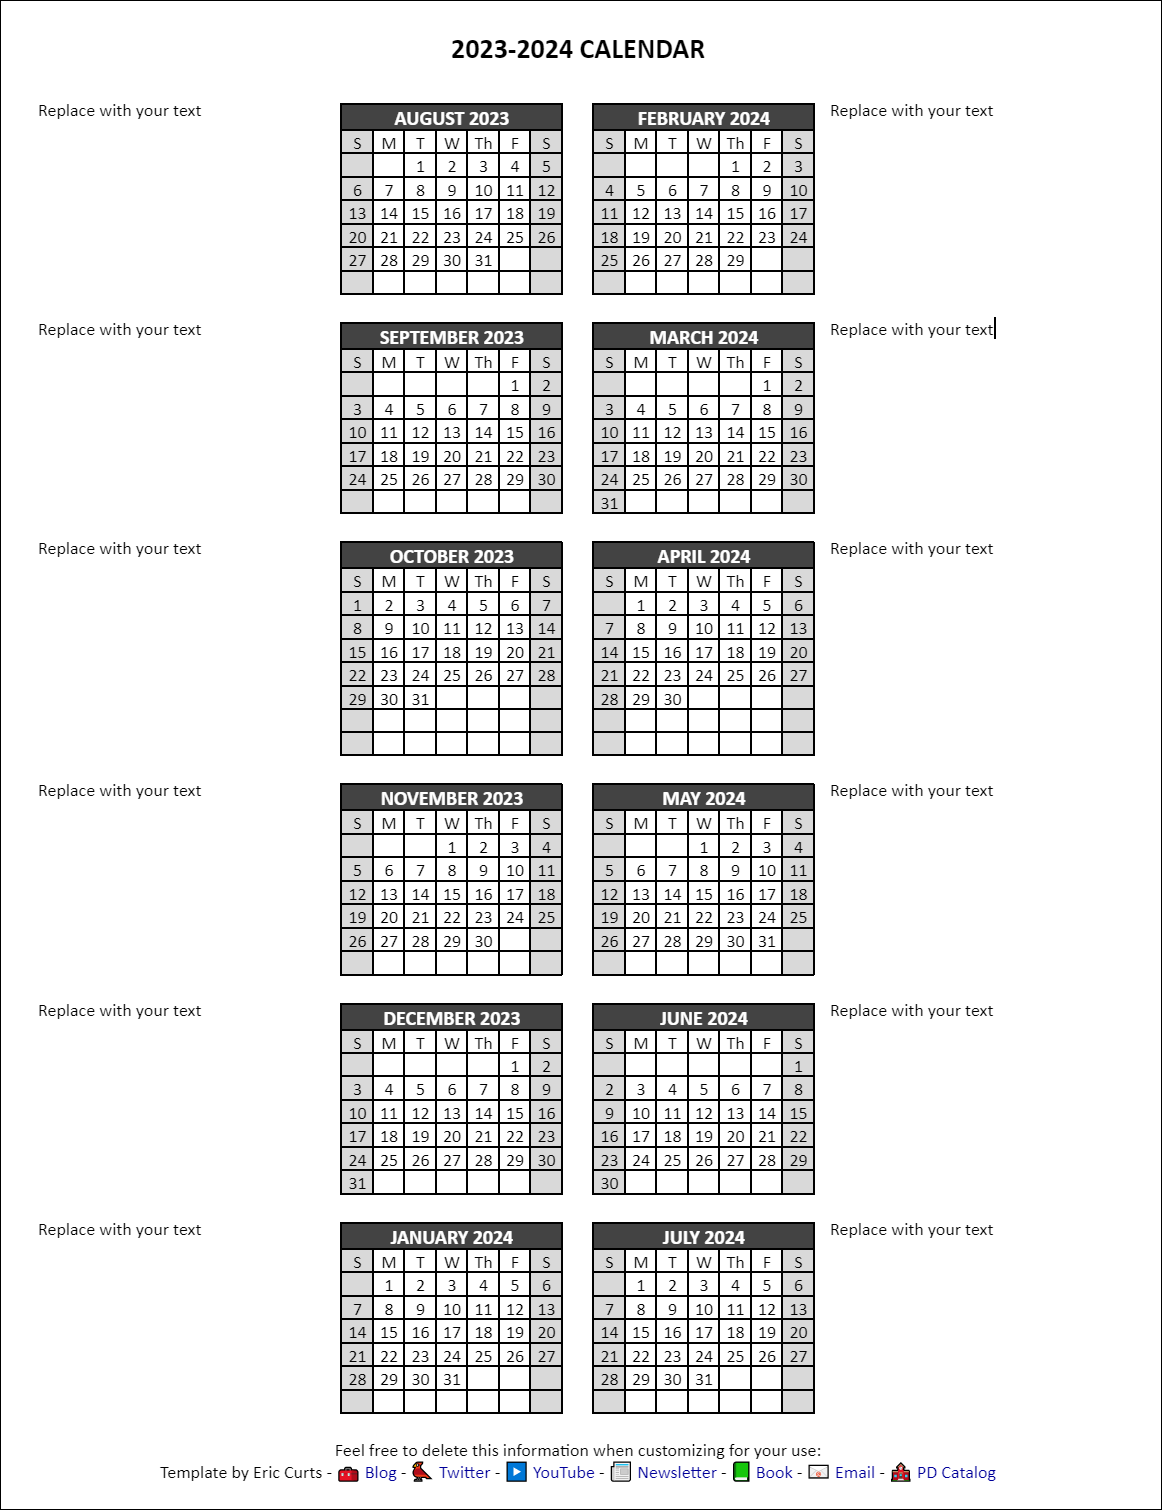 control-alt-achieve-google-docs-calendar-templates-for-the-2023-2024-school-year